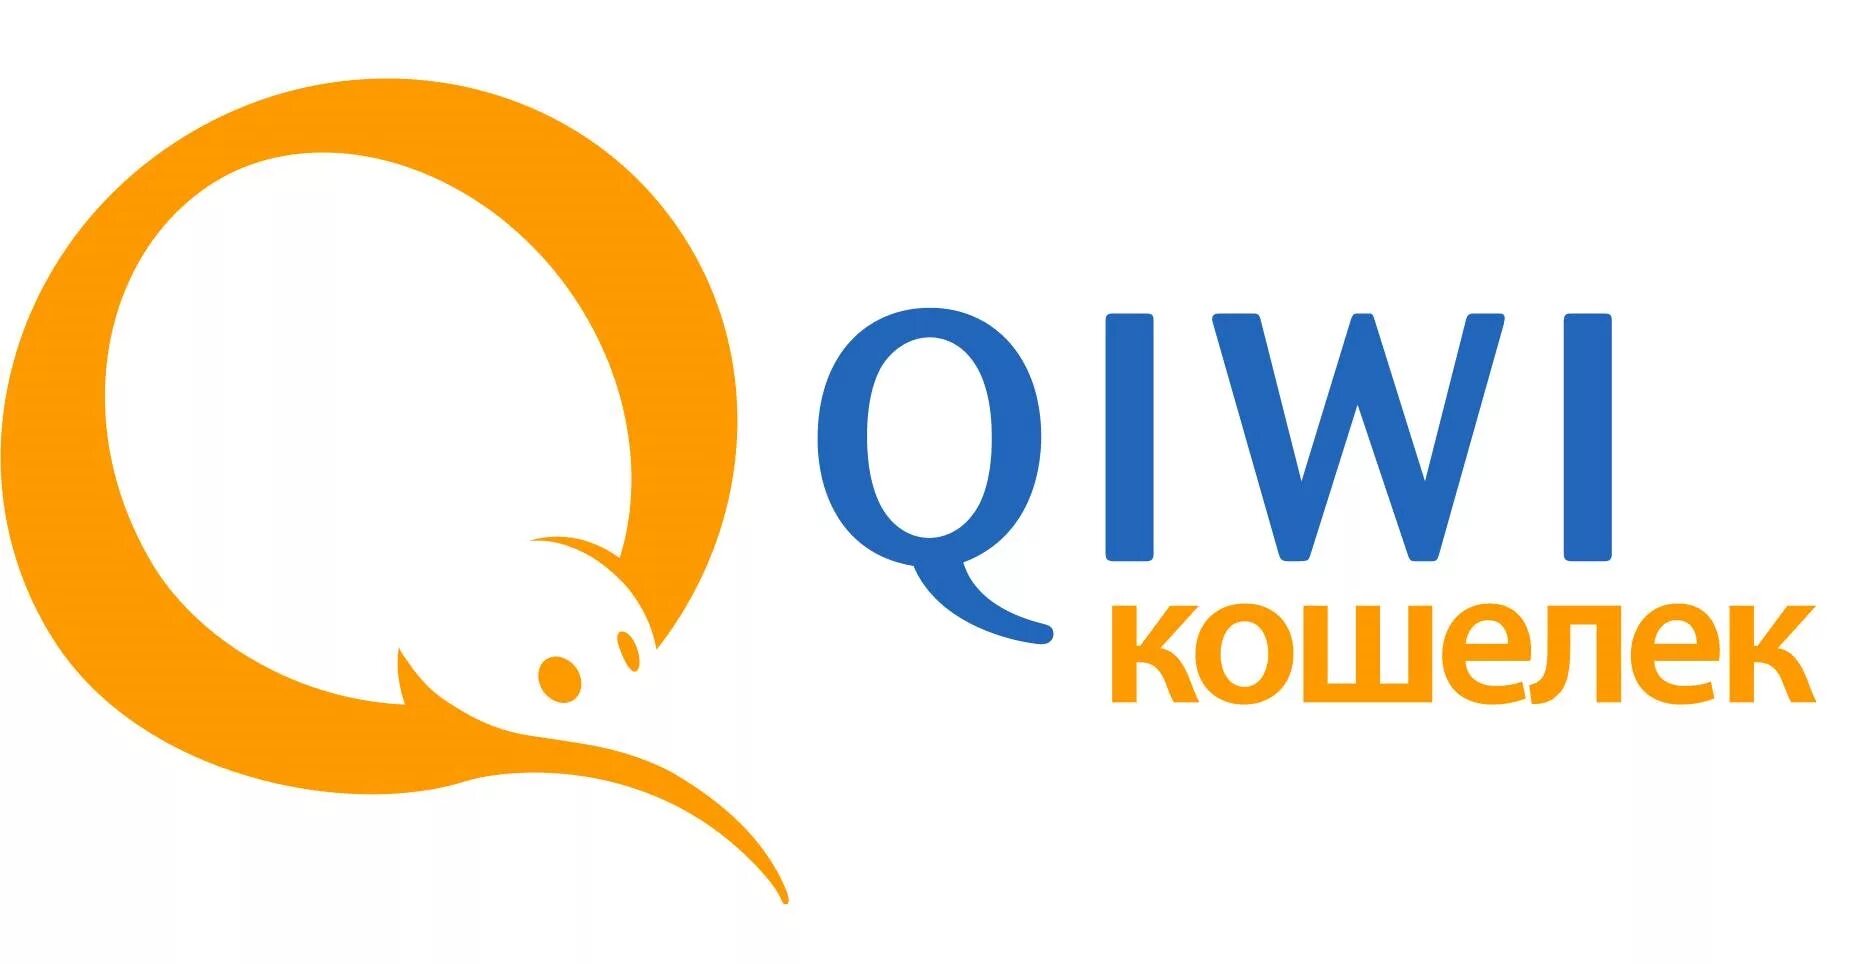 Новости киви кошелек в россии сегодня. Киви кошелек. QIWI логотип. Картинки QIWI кошелек. Иконка киви кошелька.